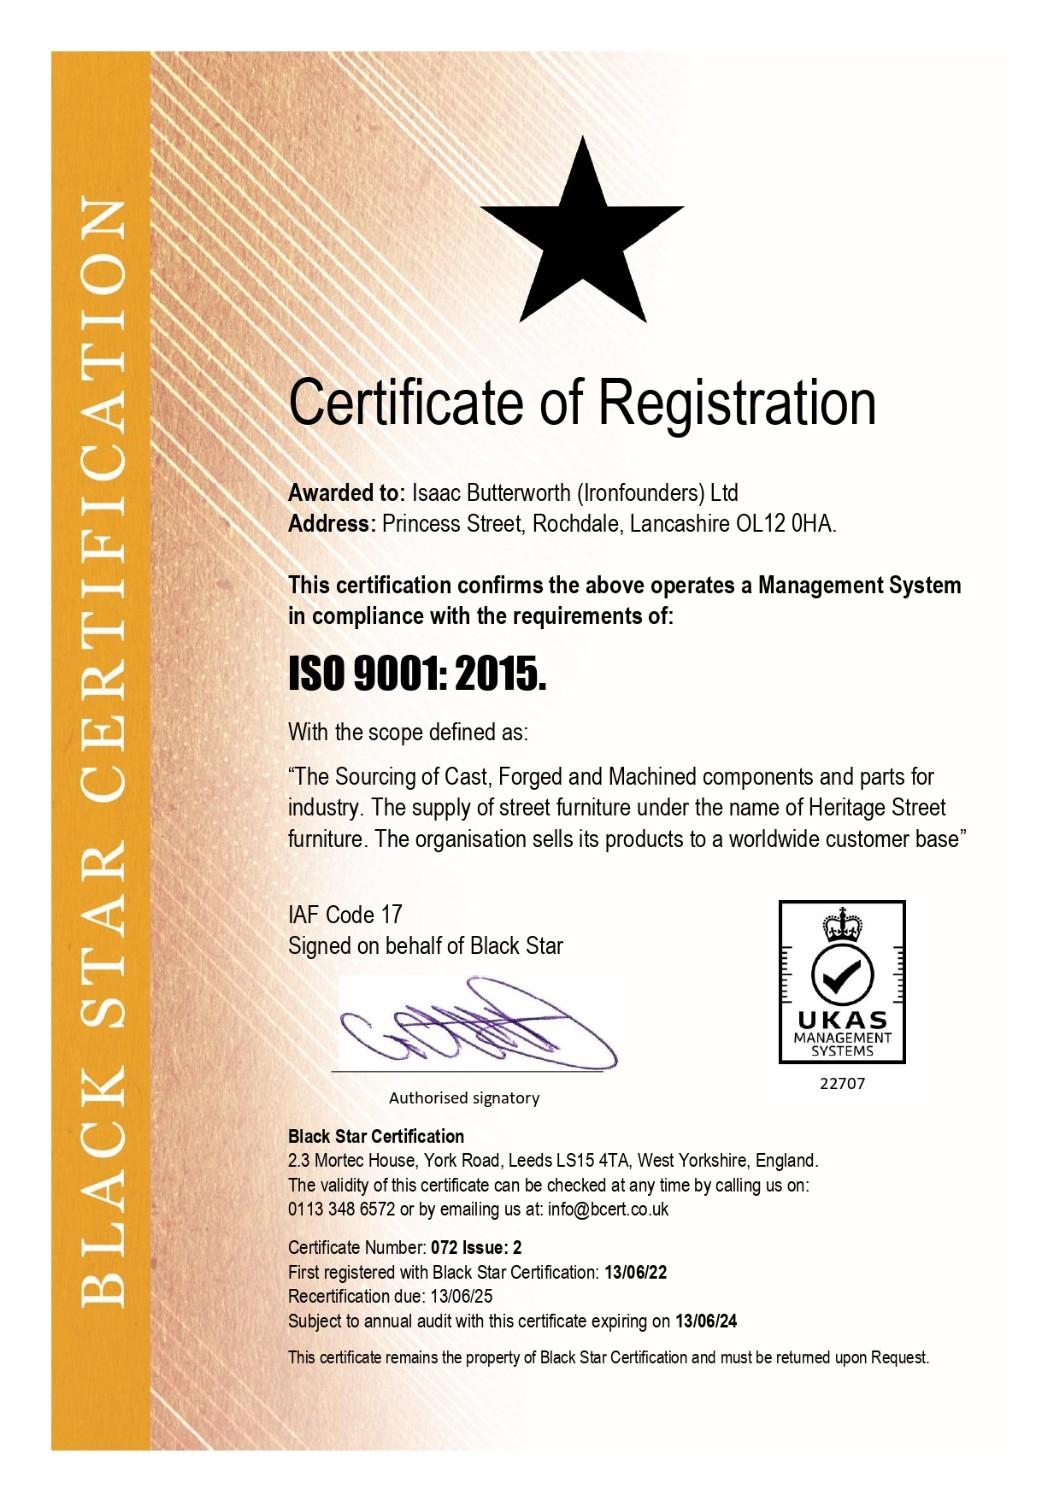 ISO9001:2015 Certificate of Registration